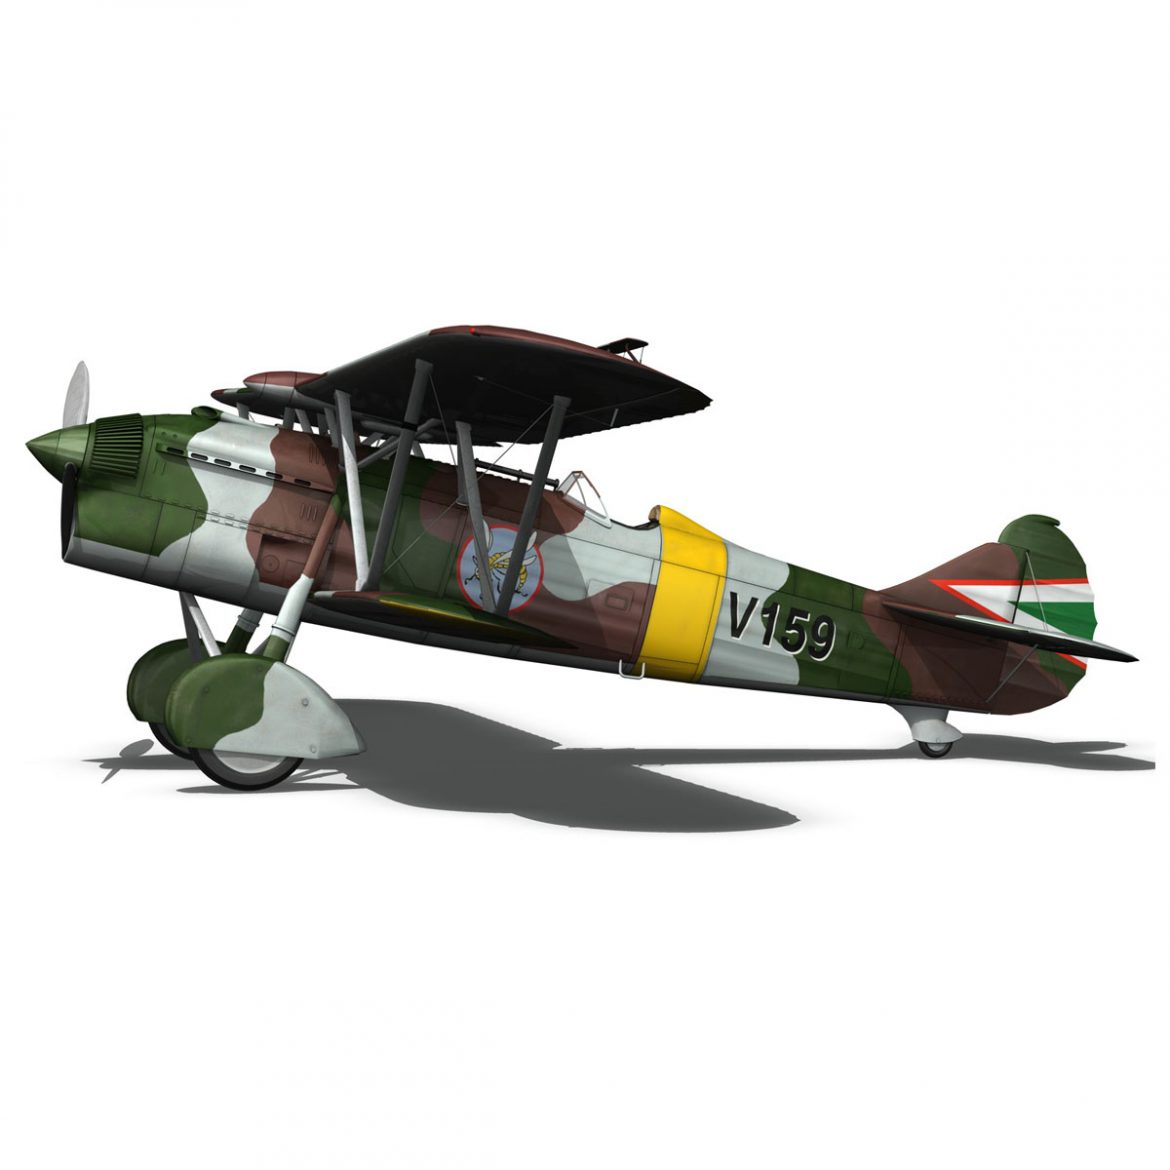 fiat cr.32 – hungarian royal air force – v159 3d model fbx c4d lwo obj 299970